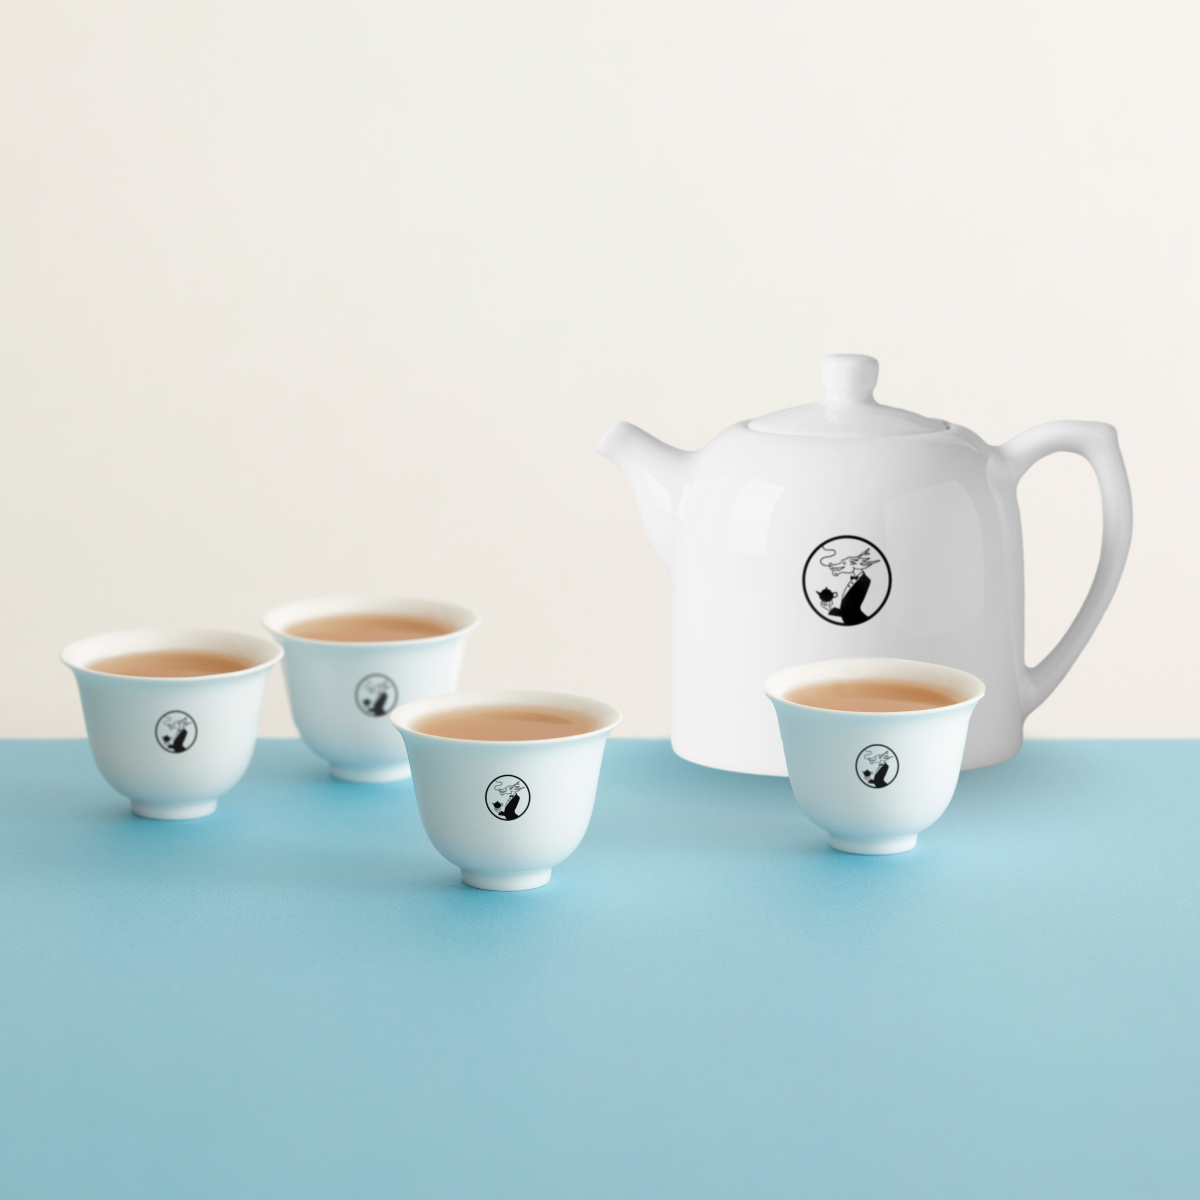 Imperial Porcelain Tea Set